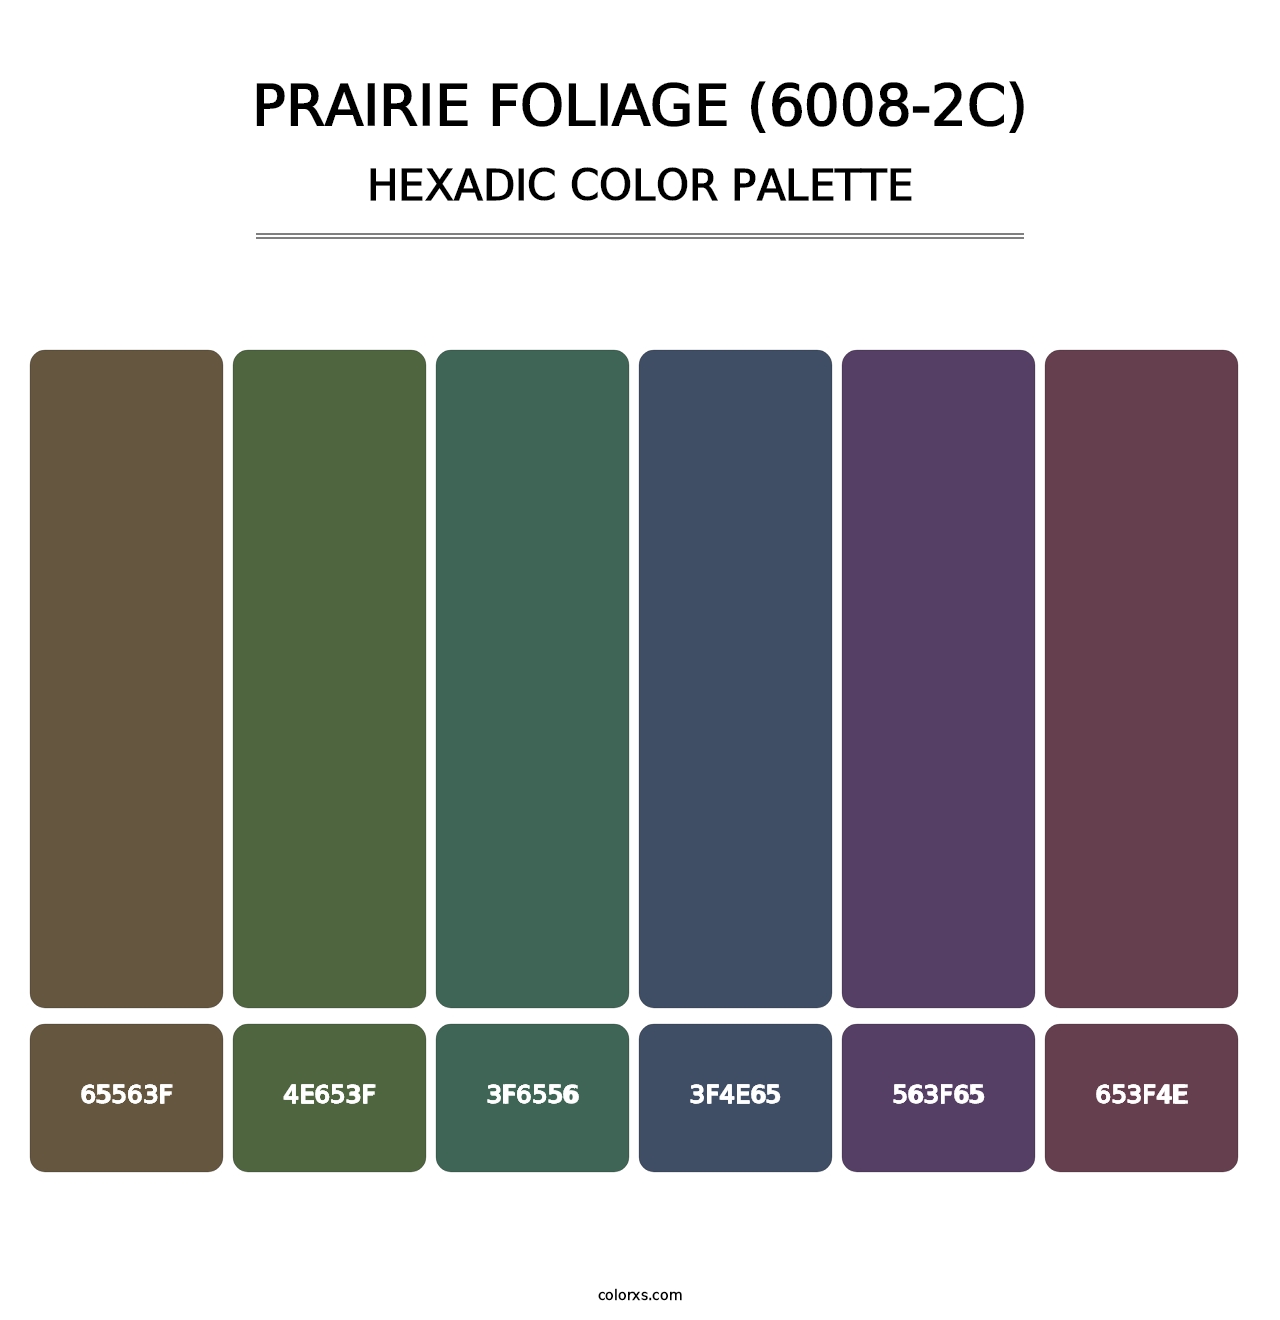 Prairie Foliage (6008-2C) - Hexadic Color Palette